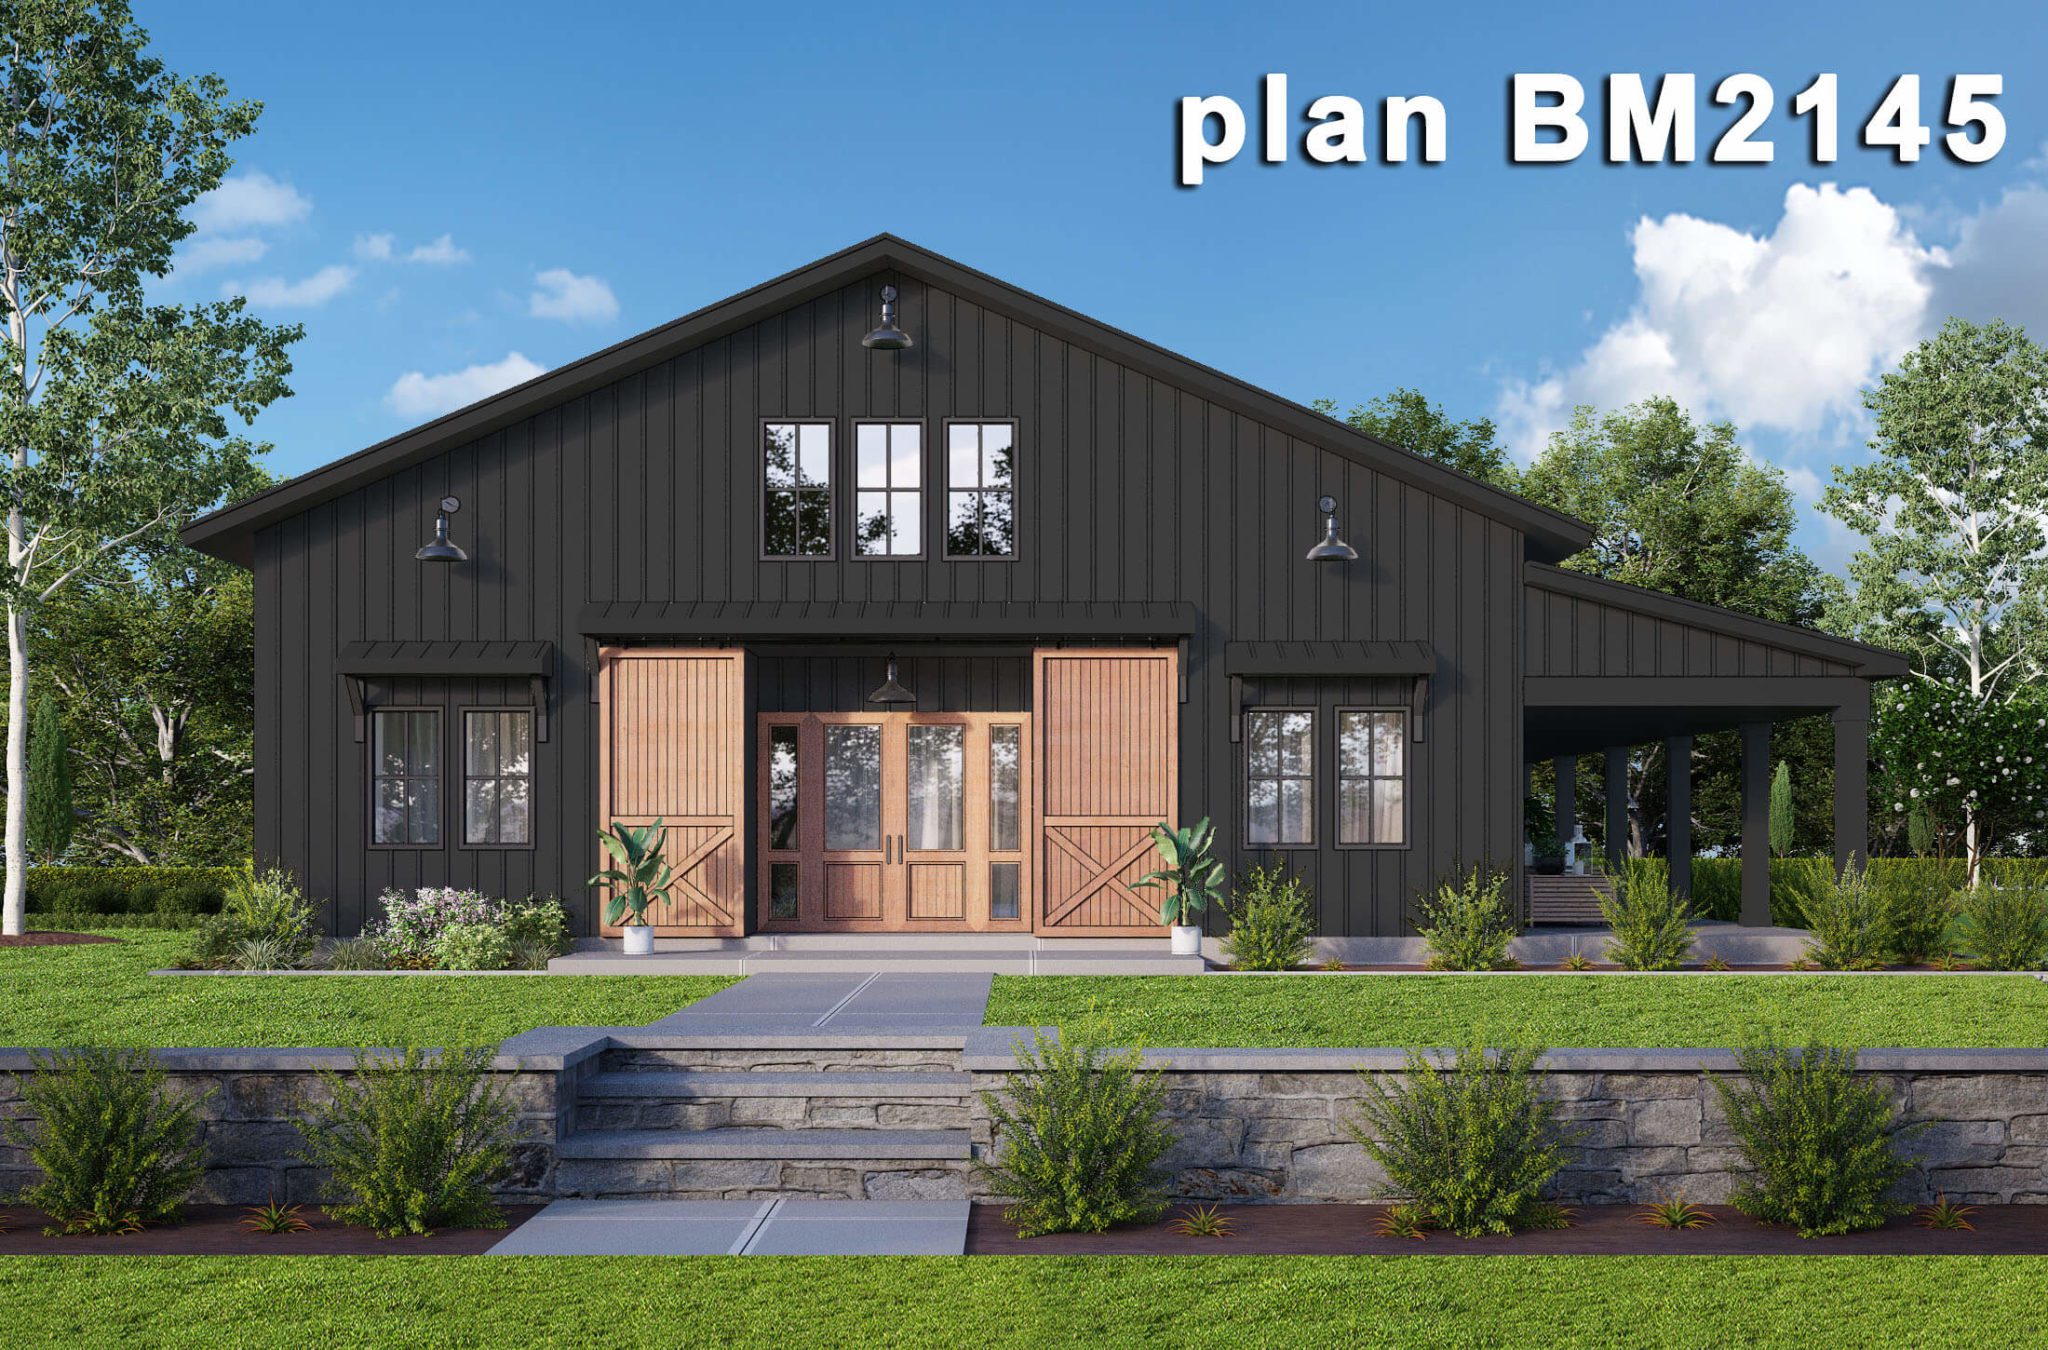 black barndominium style house plan with large barn doors